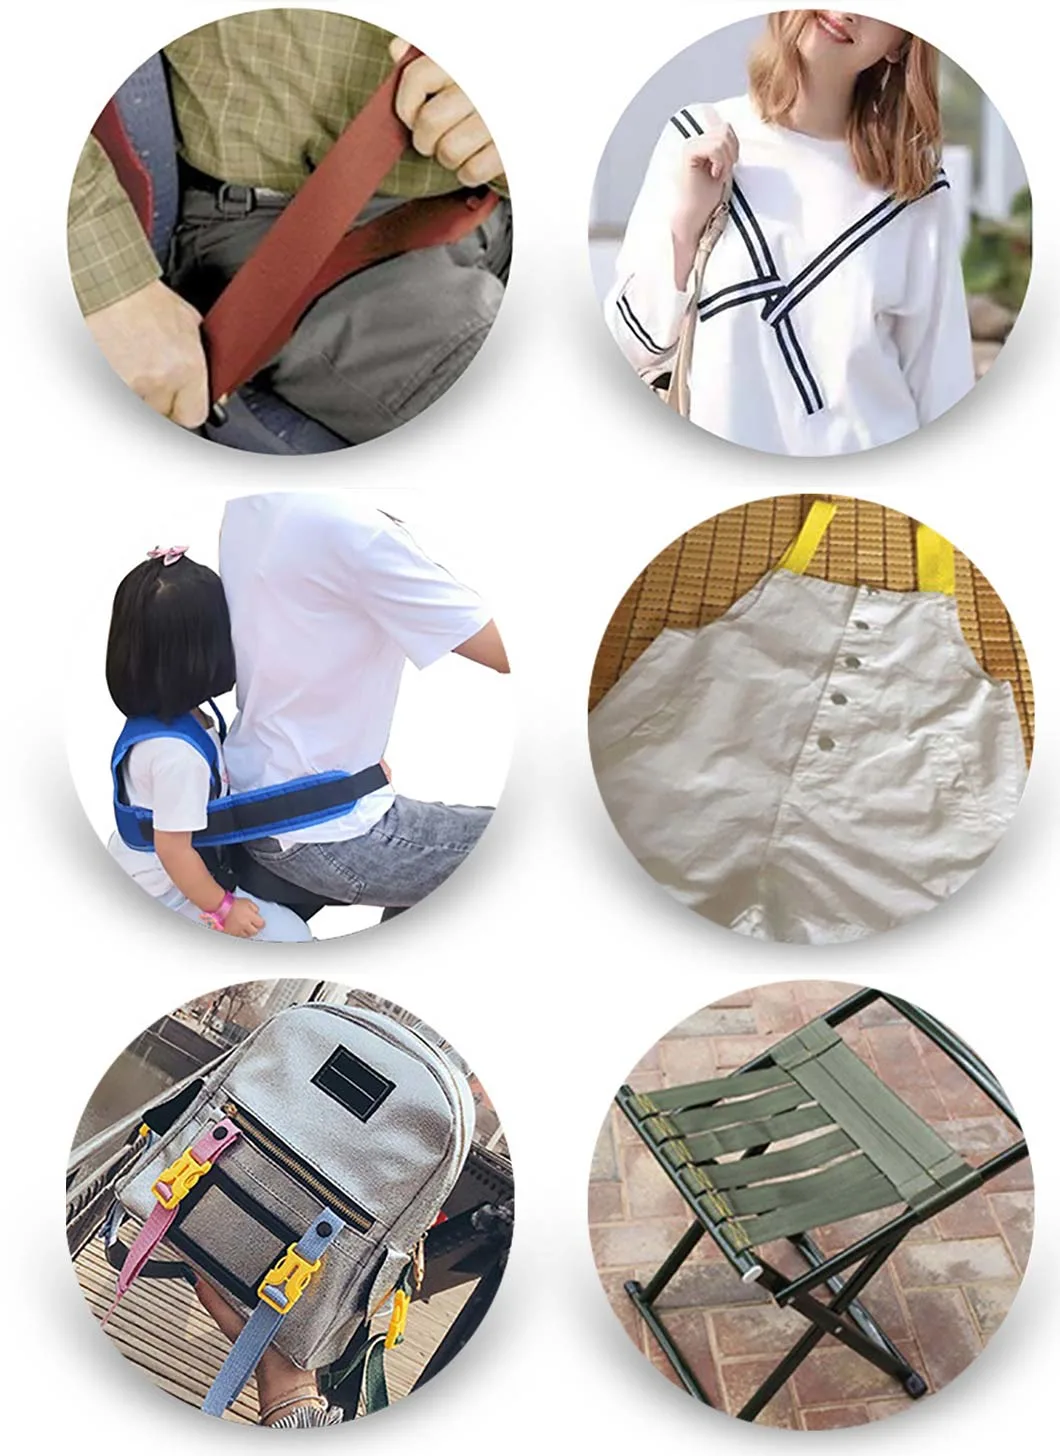 Wholesale Custom 25mm/32mm Nylon Jacquard Belt Webbing for Bag Strap/Belts